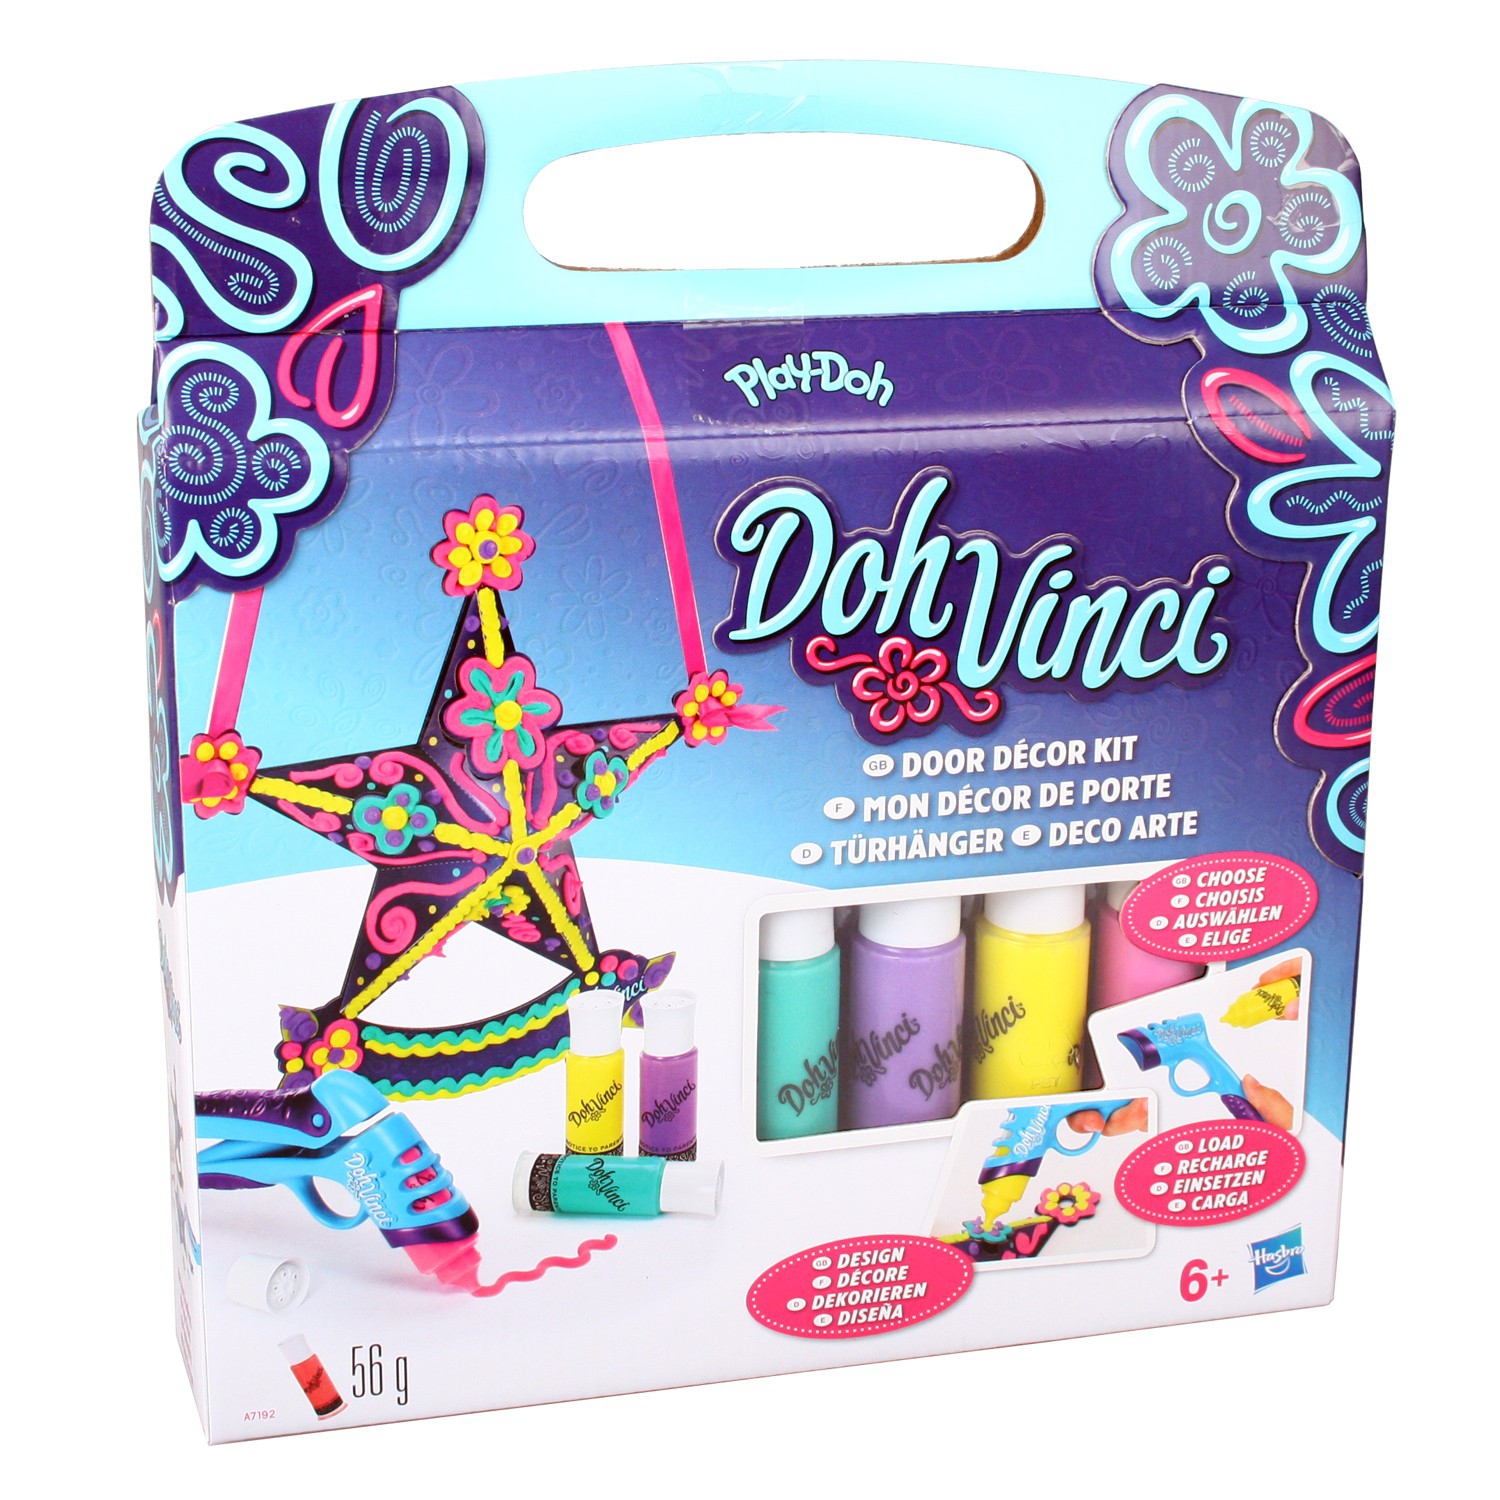 Play-doh 'Dohvinci' Playset Door Decor Kit Kids Creativity